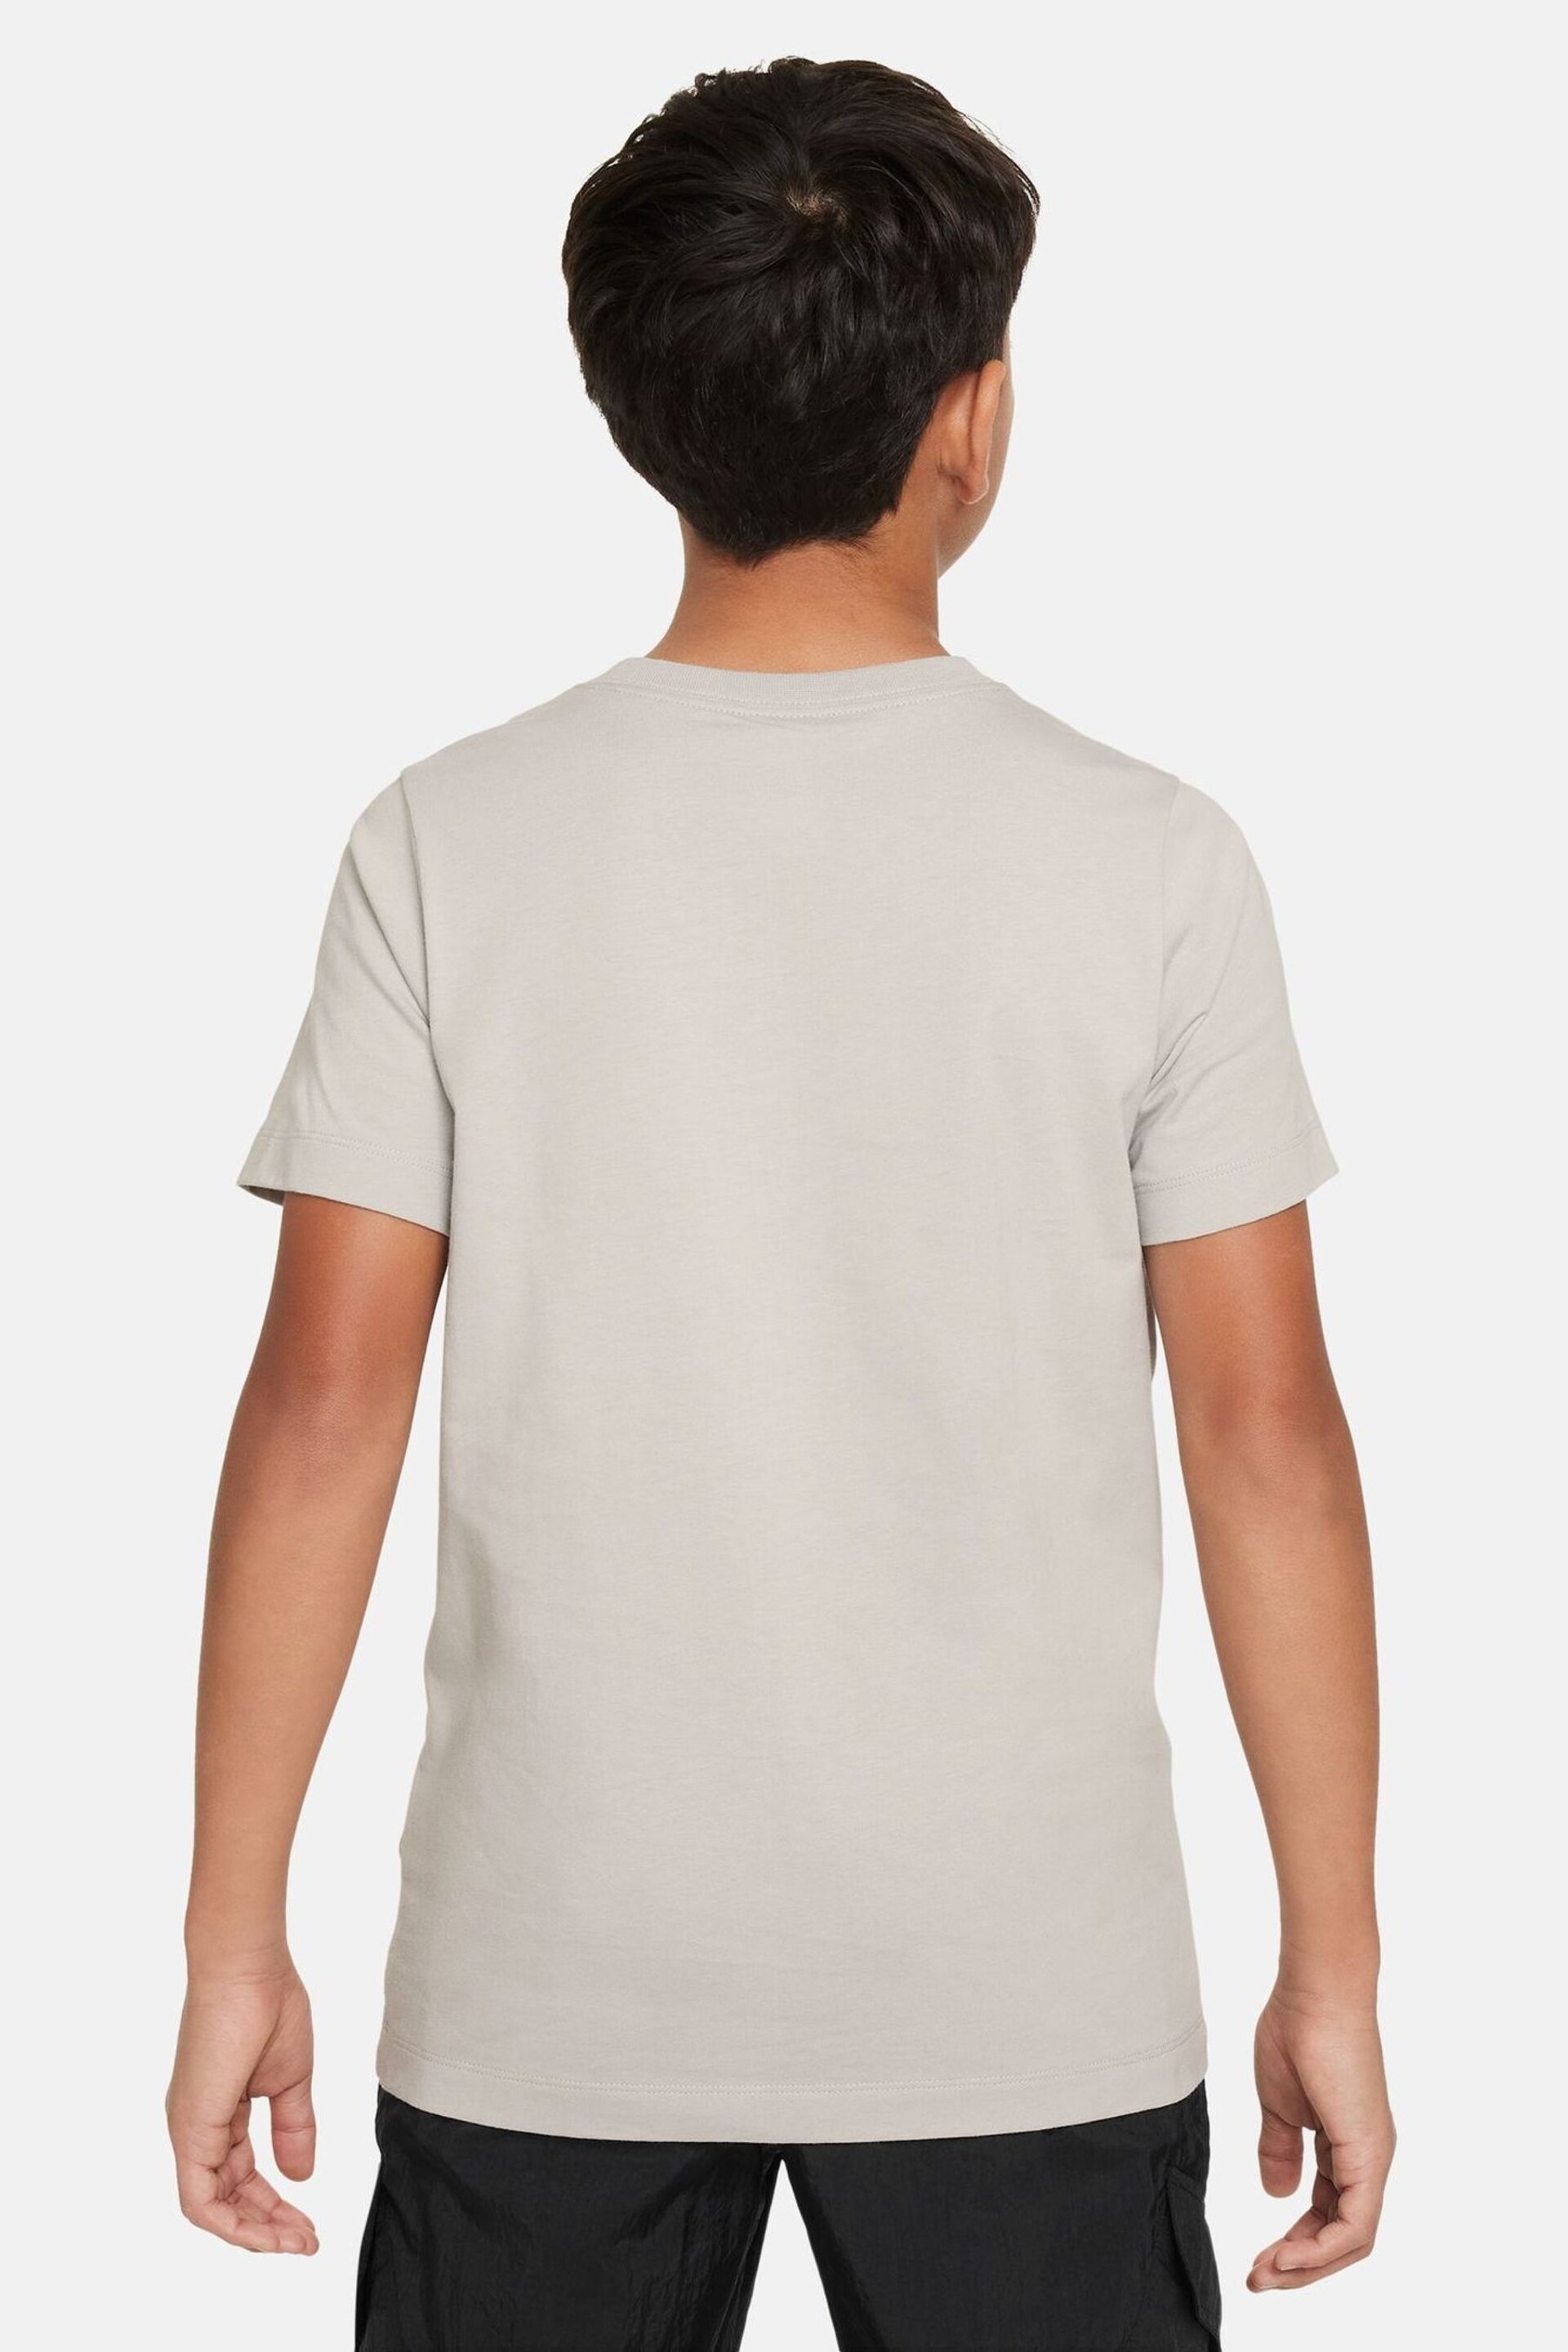 Nike Grey Swoosh T-Shirt - Image 2 of 4